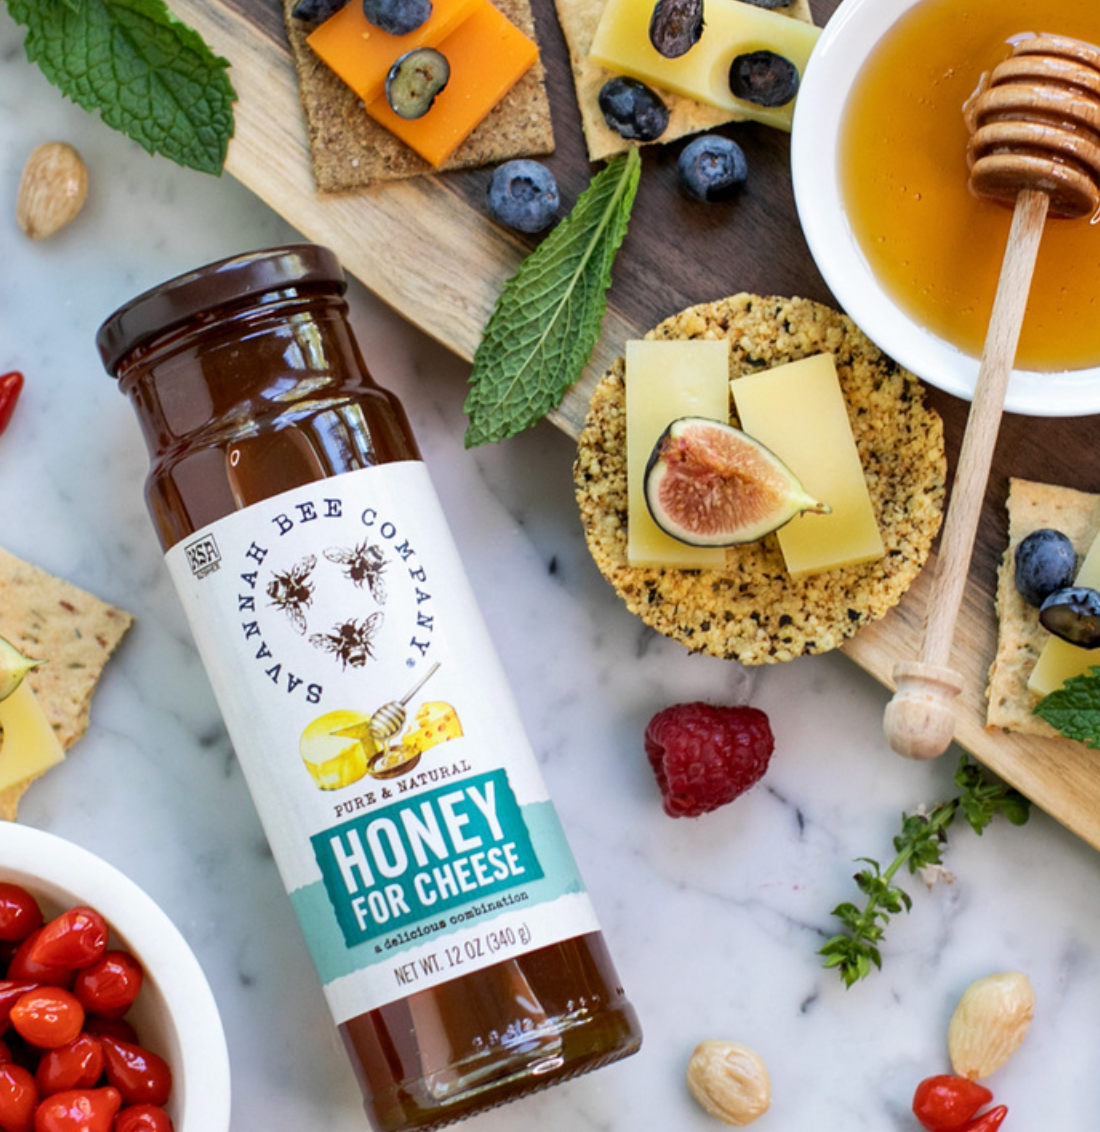 Honey for Cheese by Savannah Bee Company 3oz